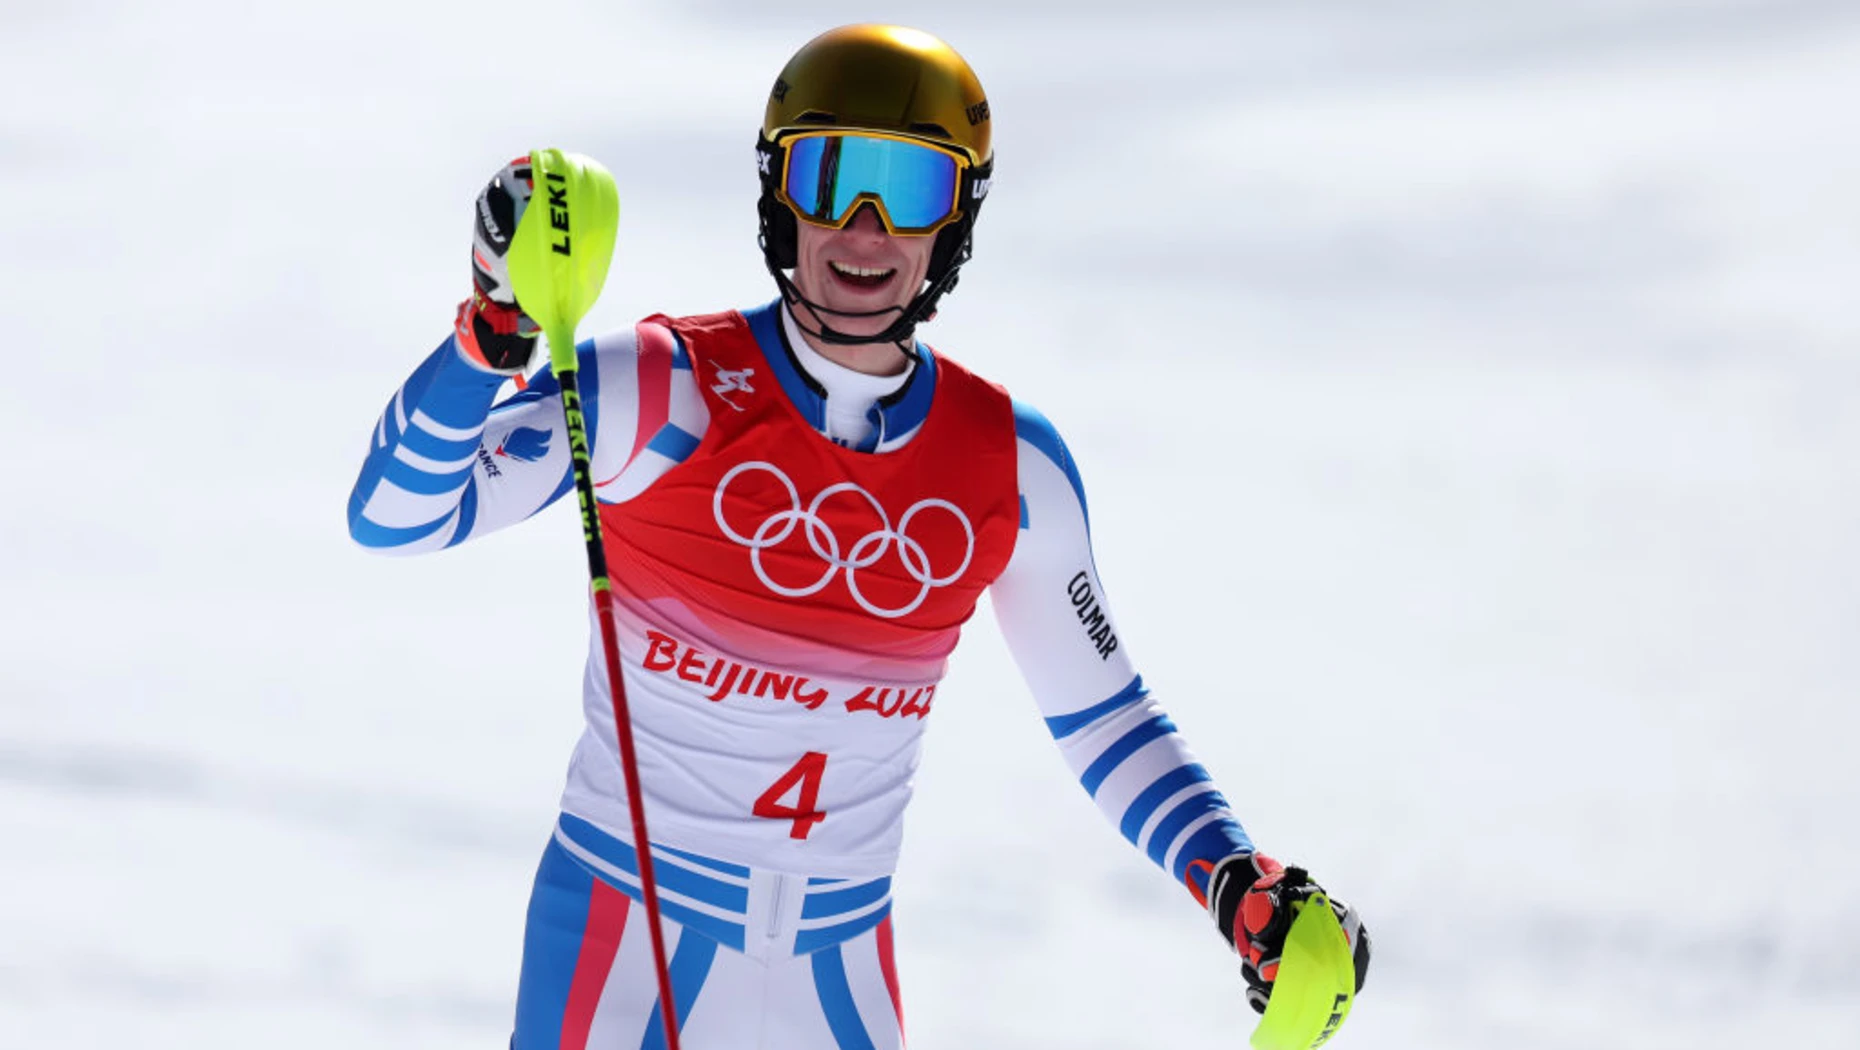 France’s Clement Noel skis to gold in Beijing 2022 Alpine men’s slalom